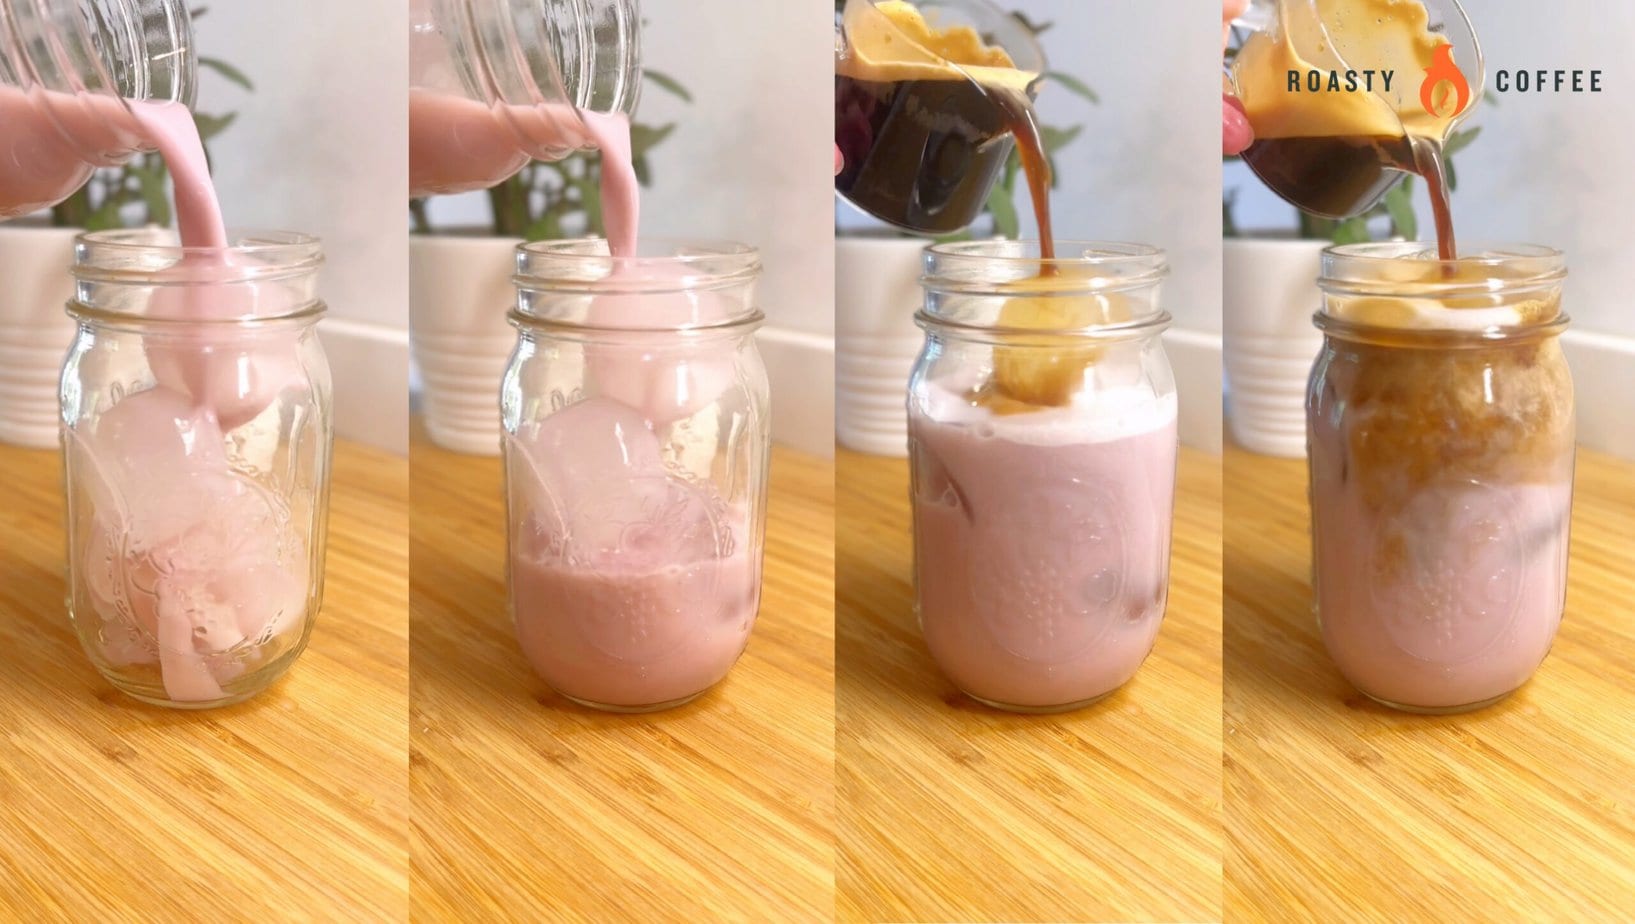 Adding cherry cream and espresso into a serving glass